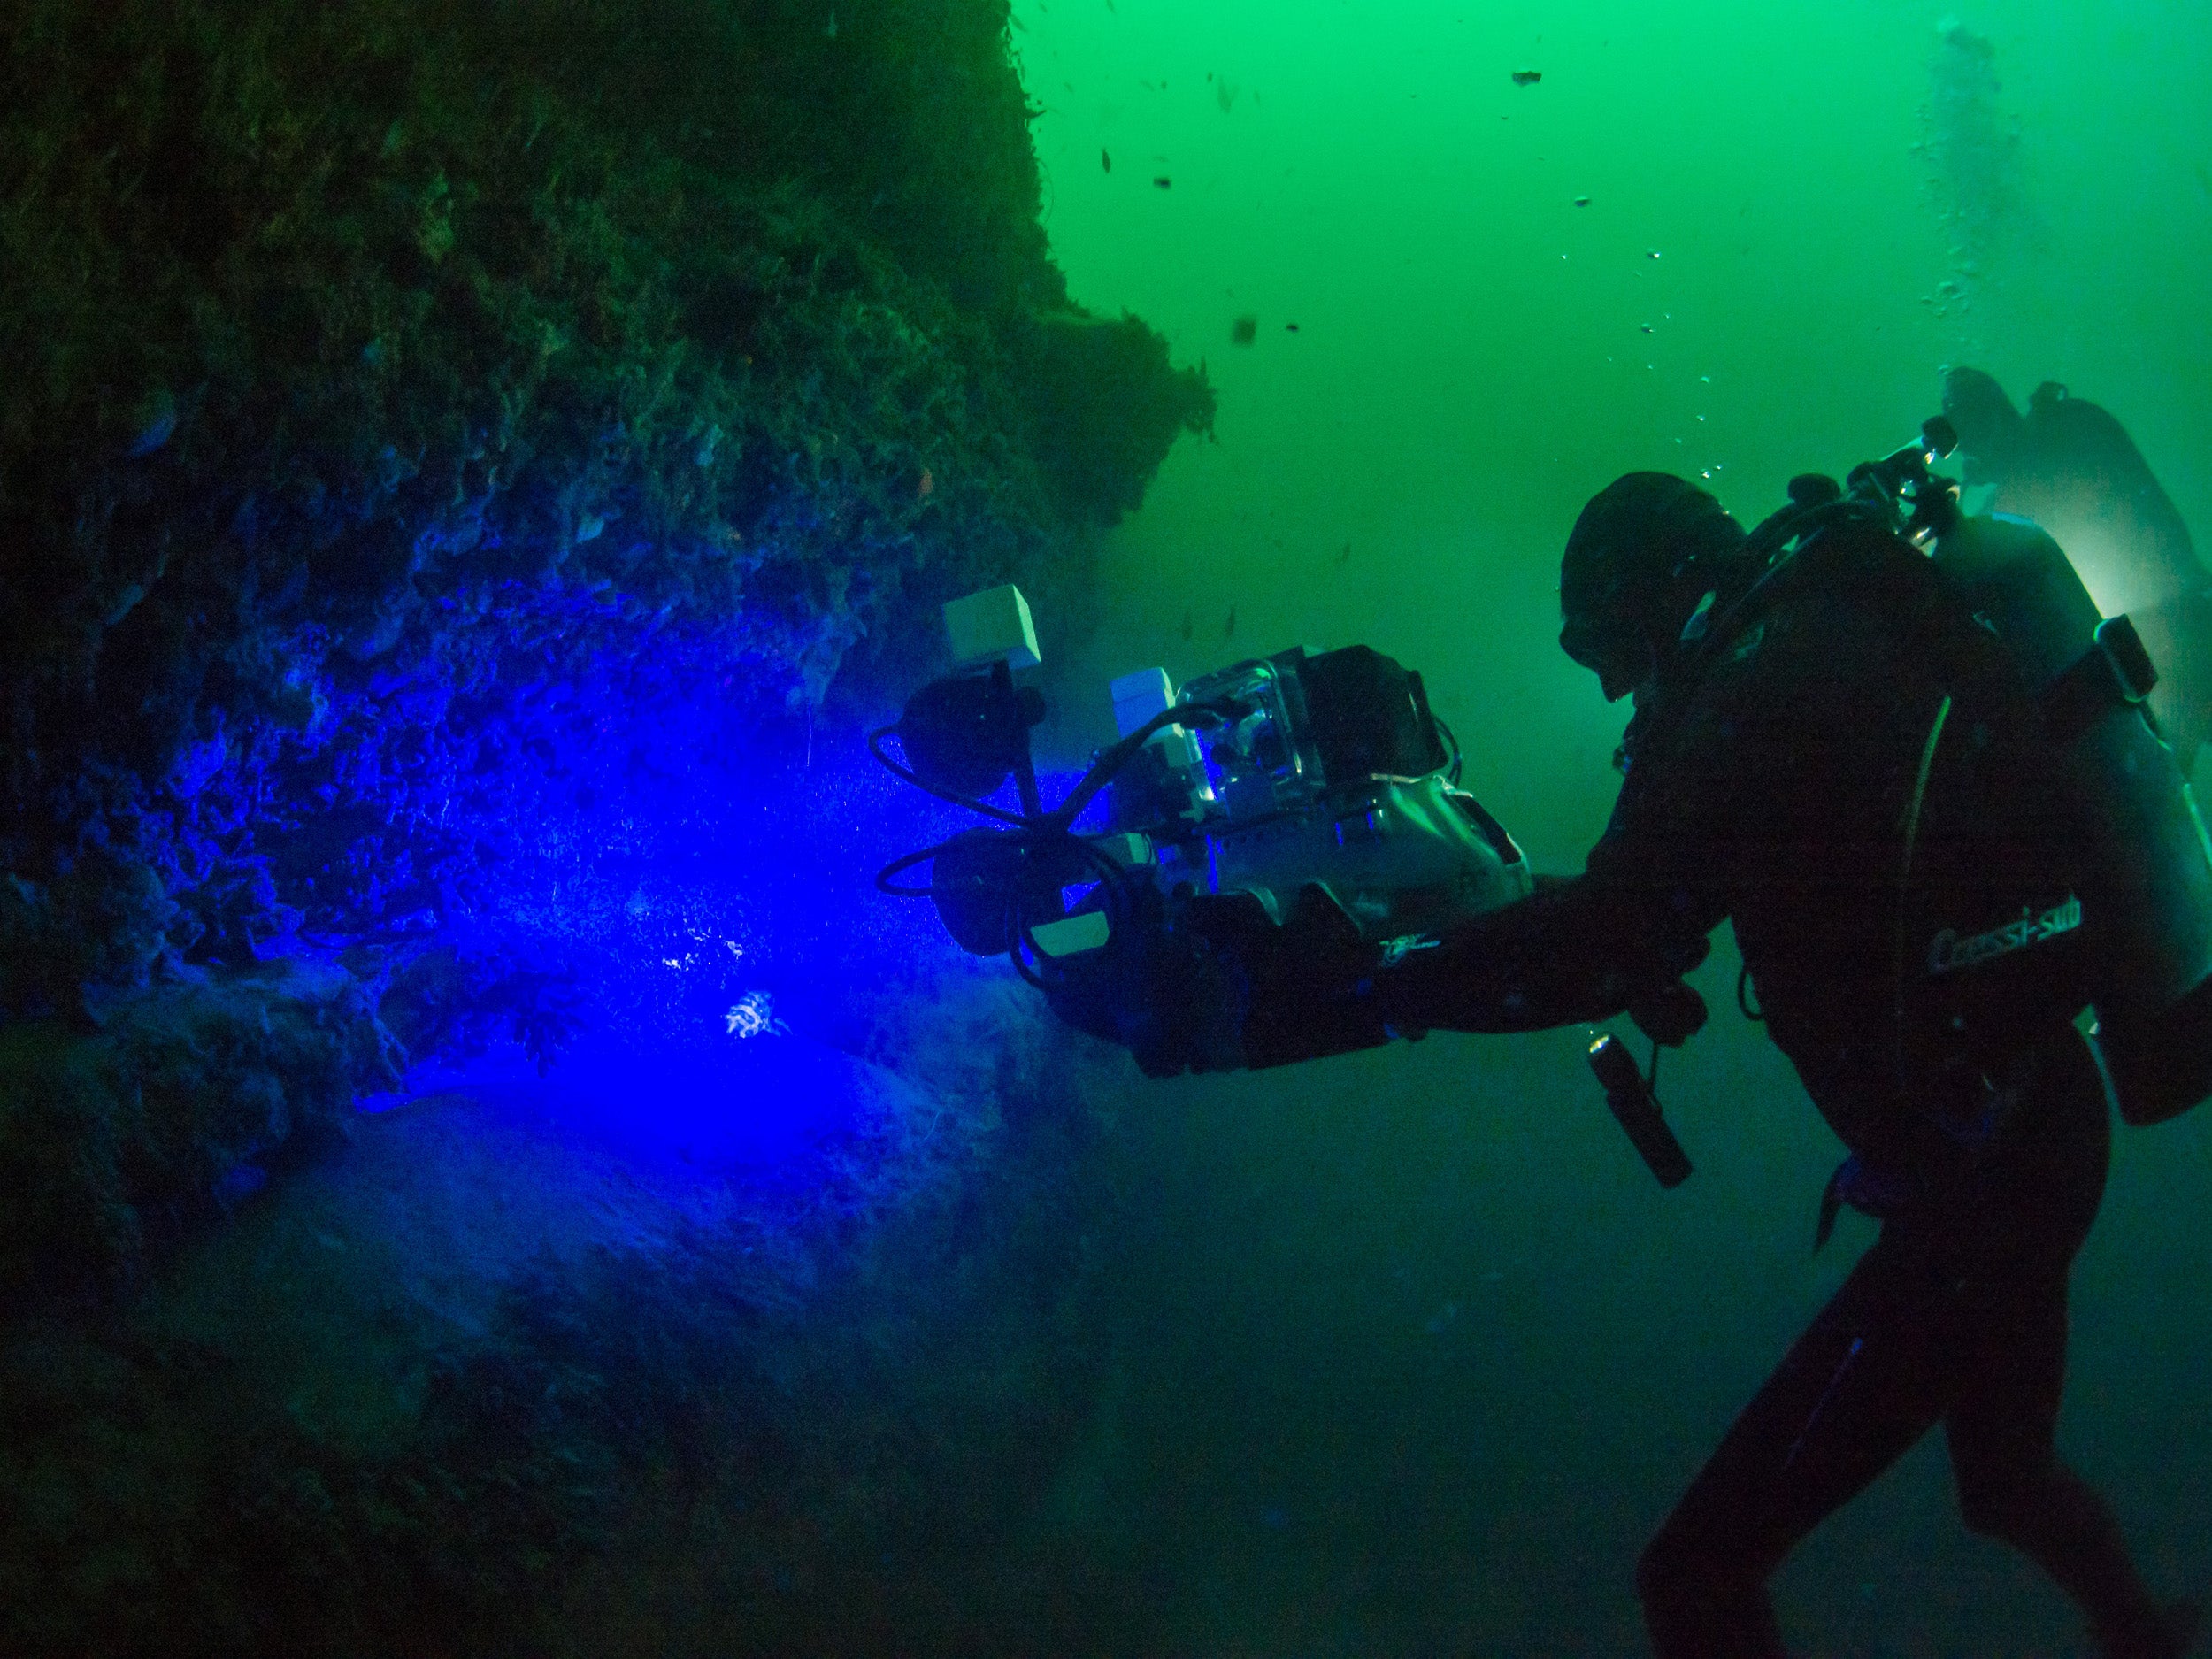 David Gruber films bioflourescence underwater.